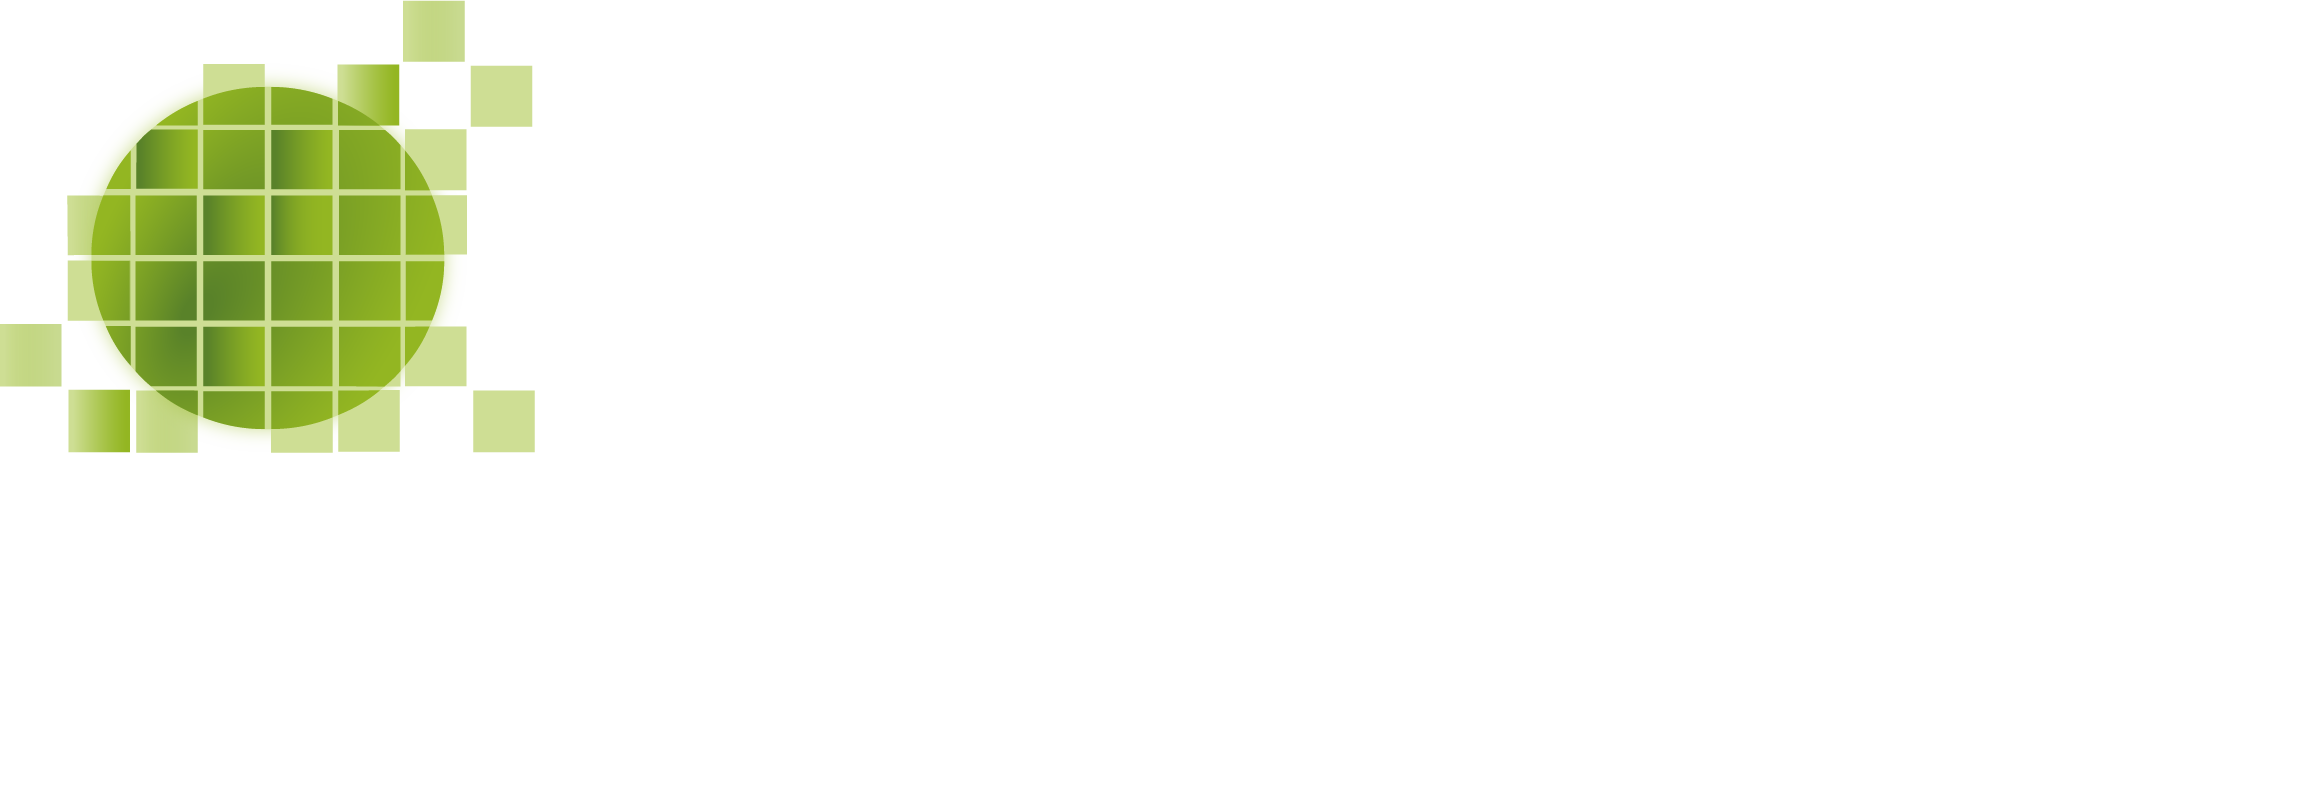 GeoMedia Logo